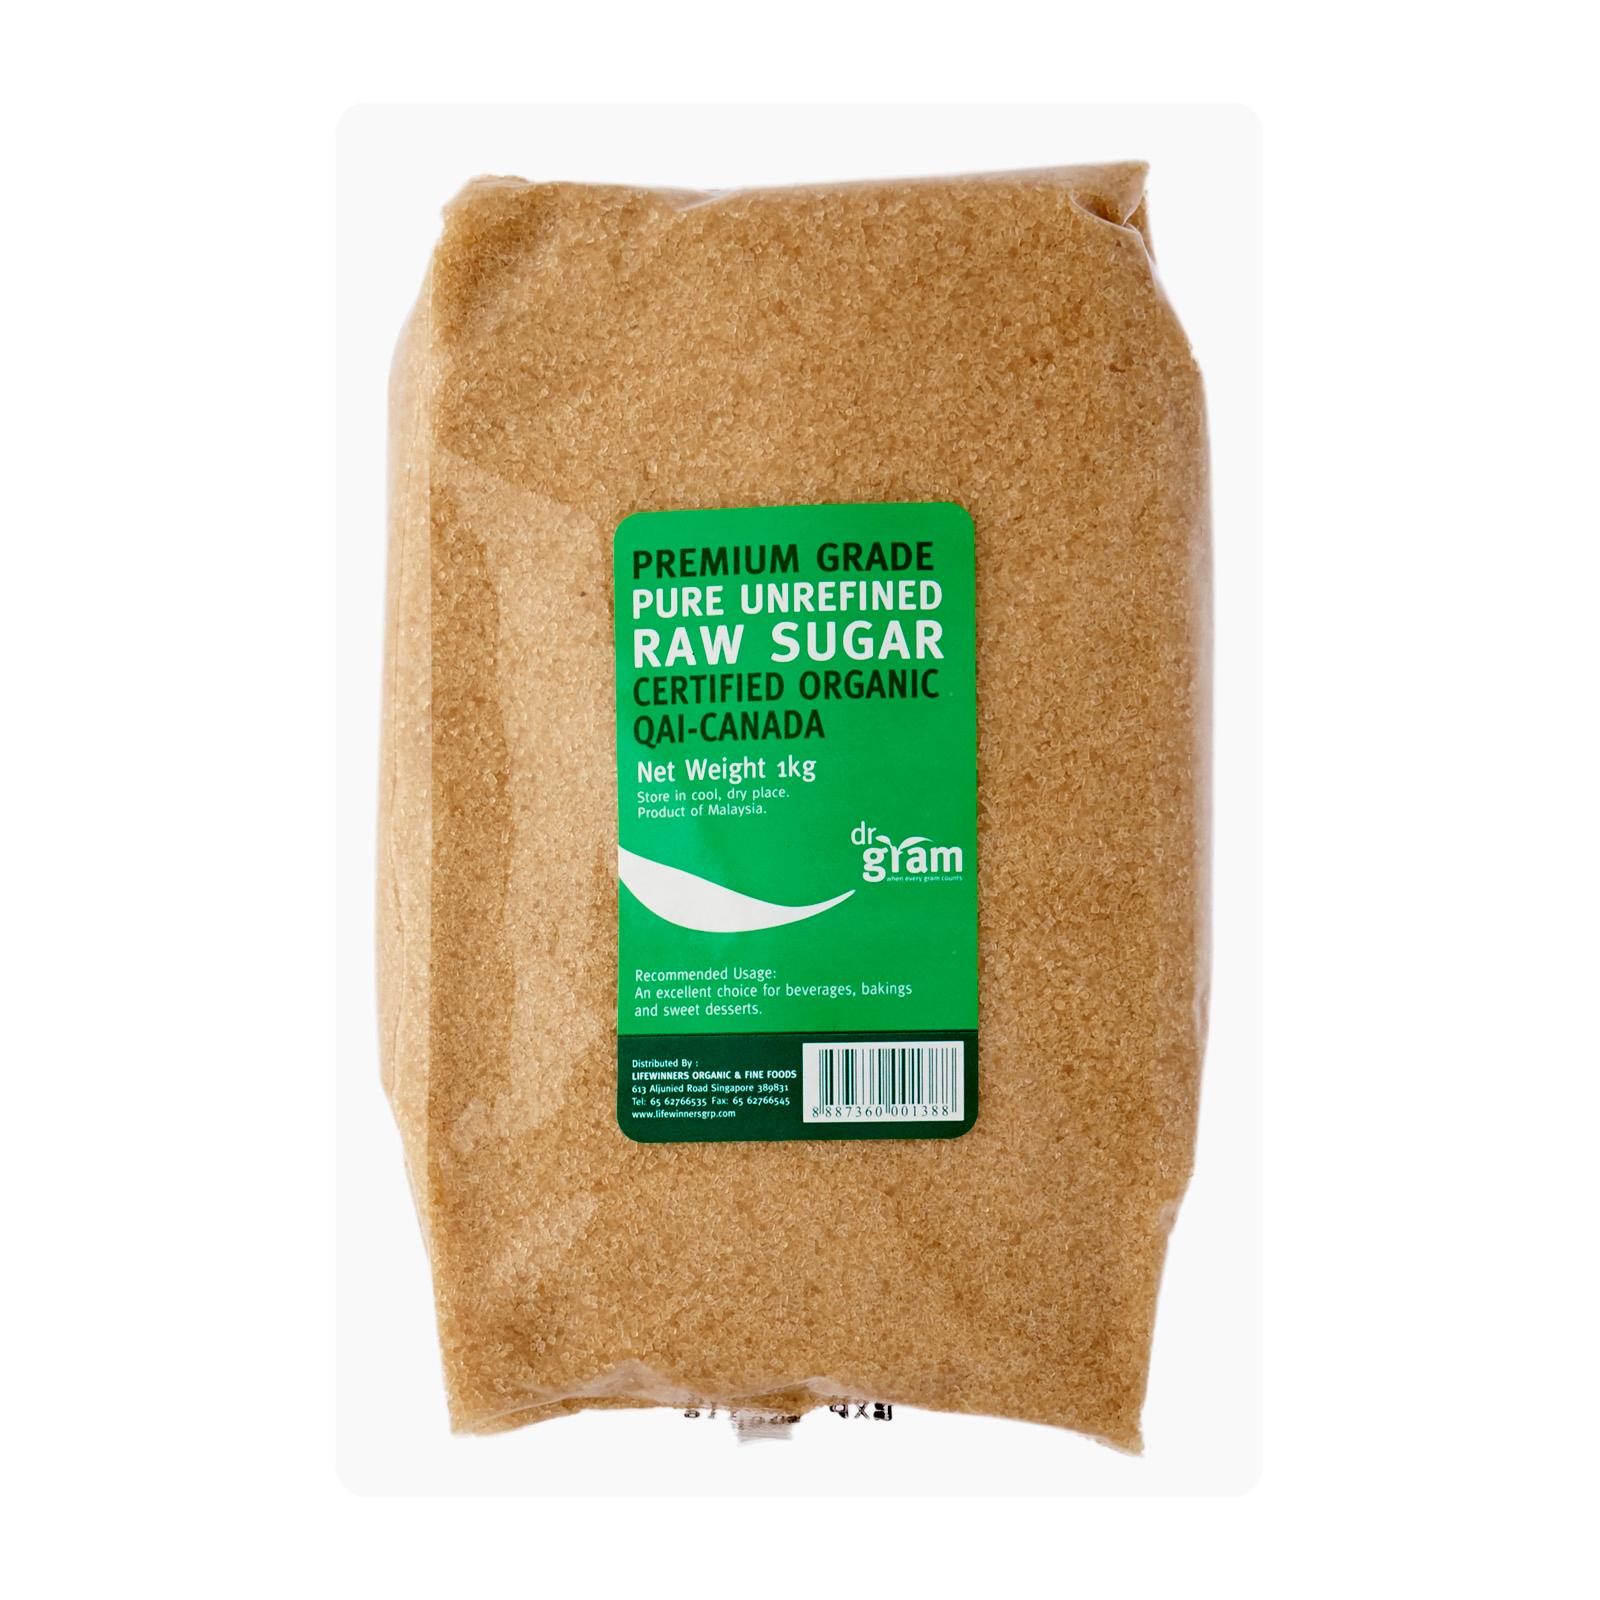 Dr Gram Organic Pure Unrefined Raw Sugar 1kg - from RedMart